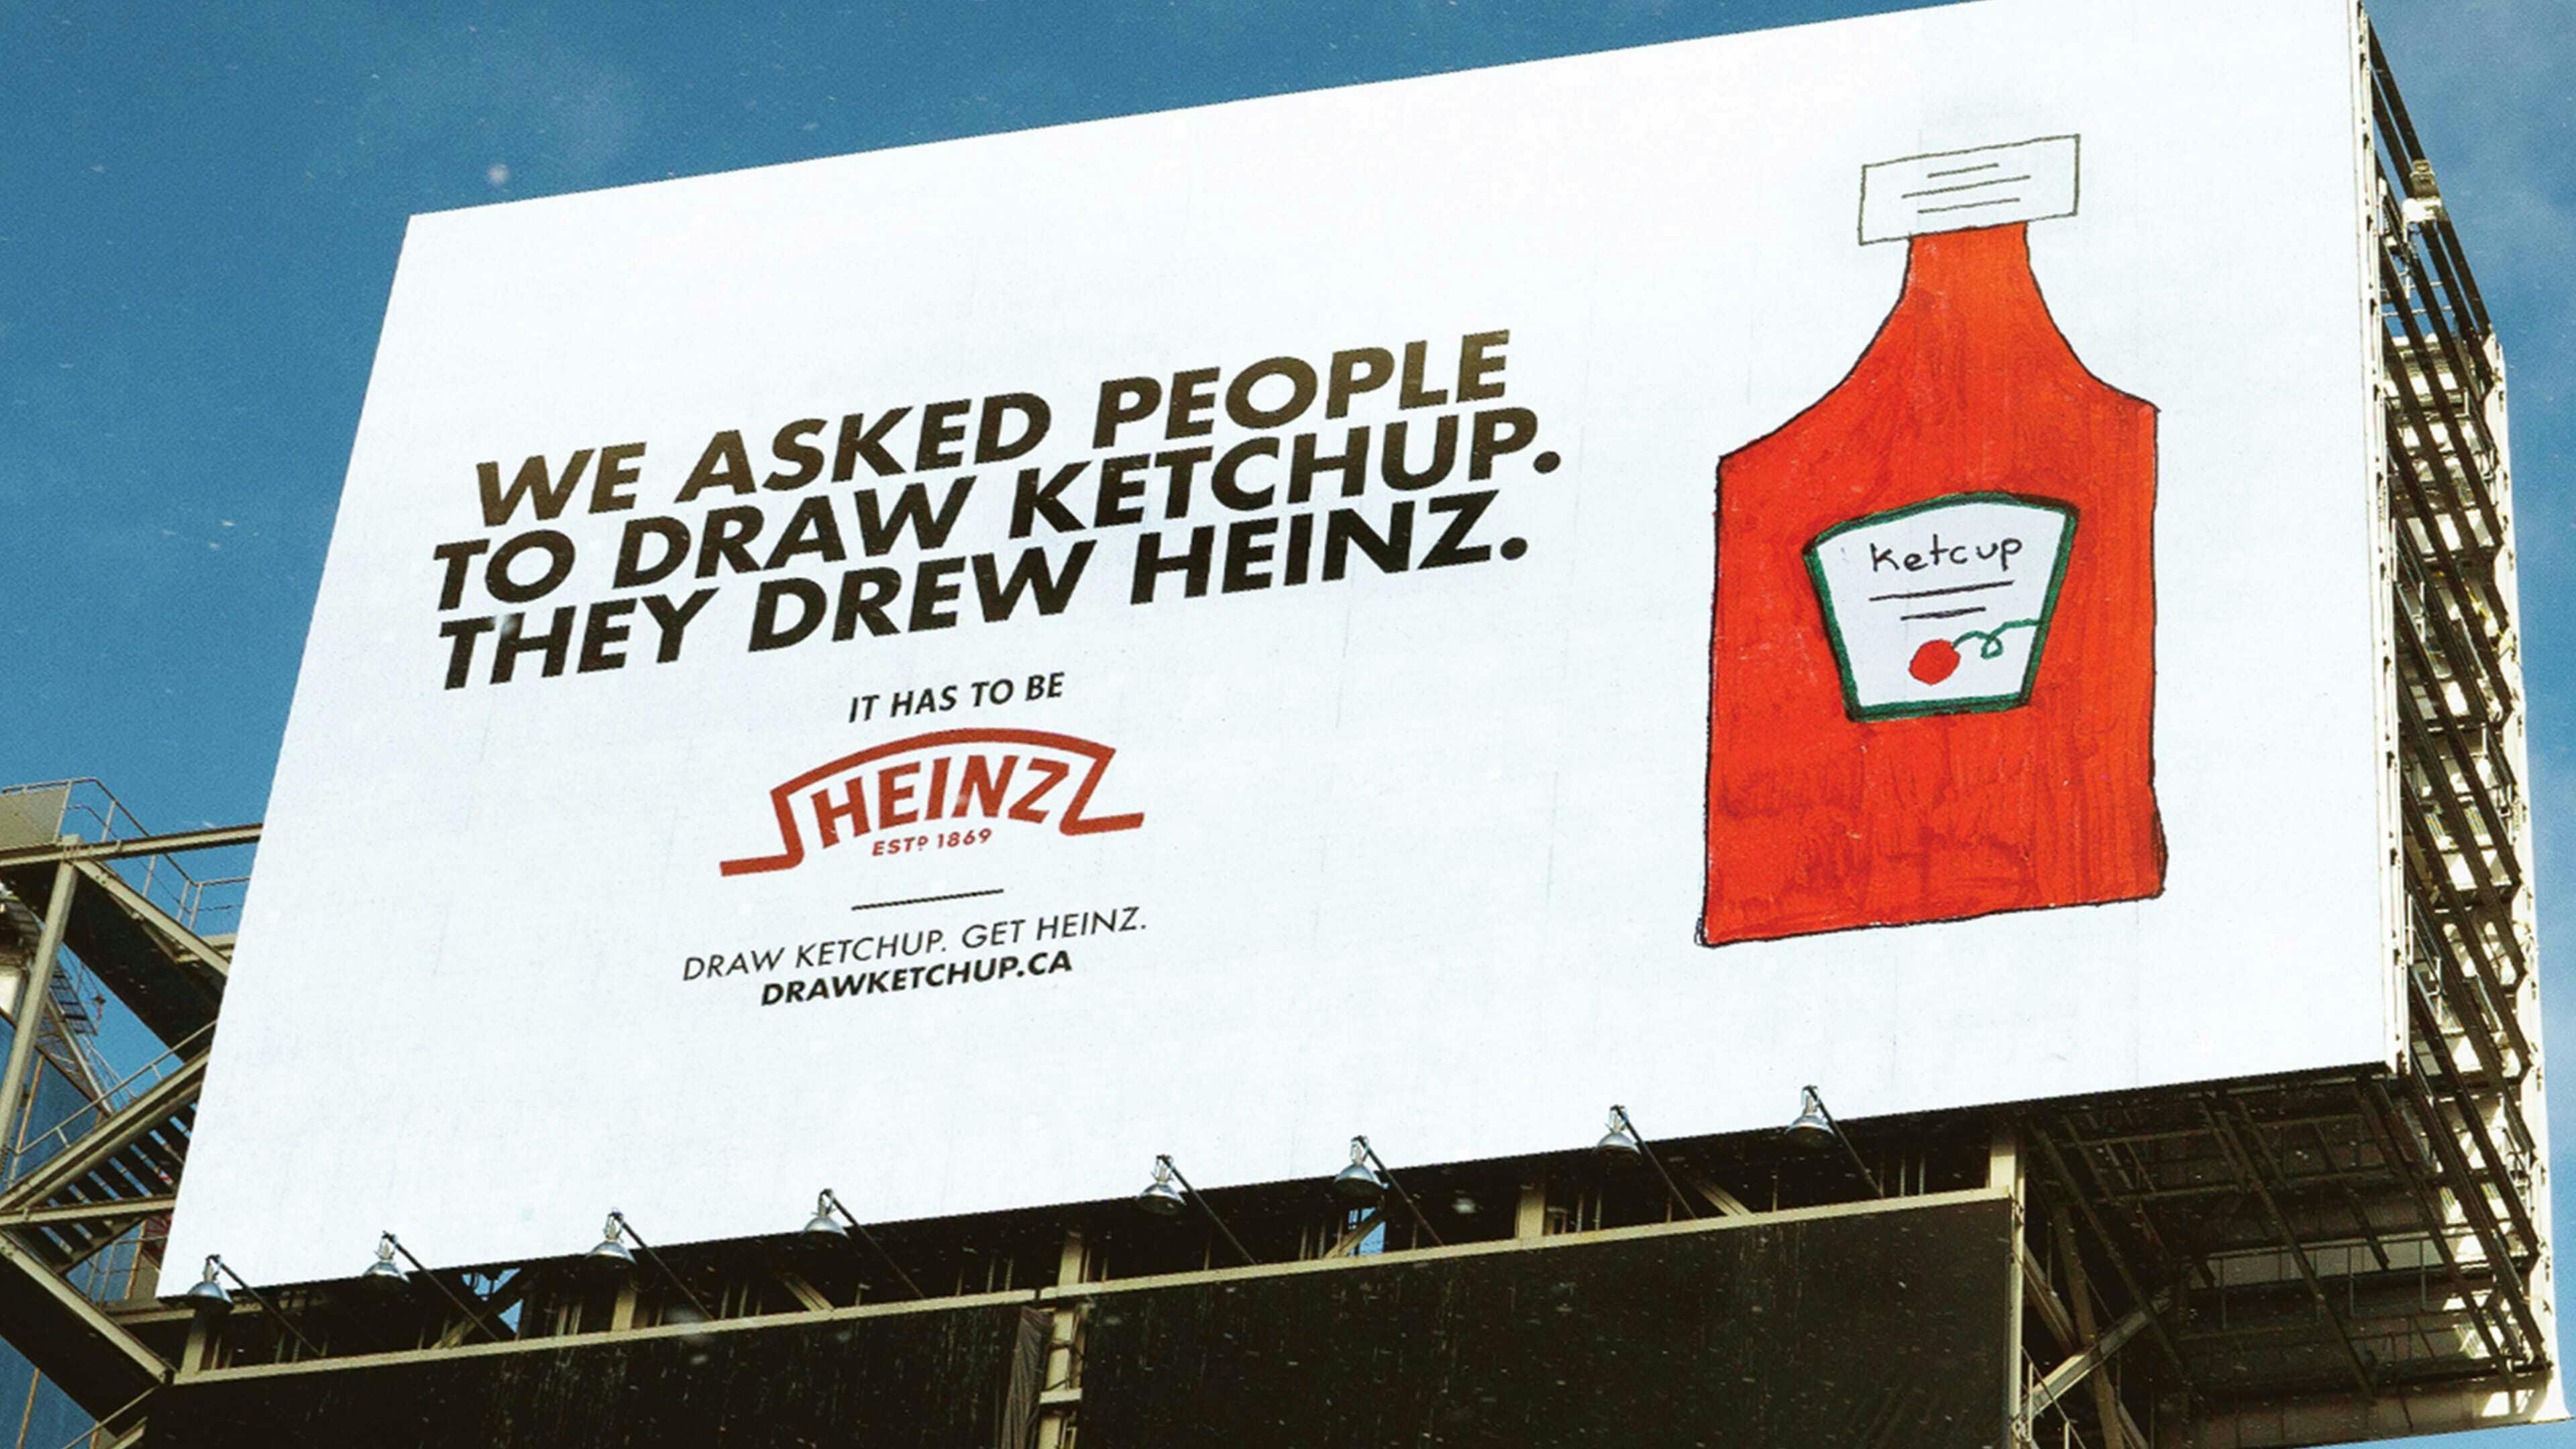 Heinz draw ketchup billboard.